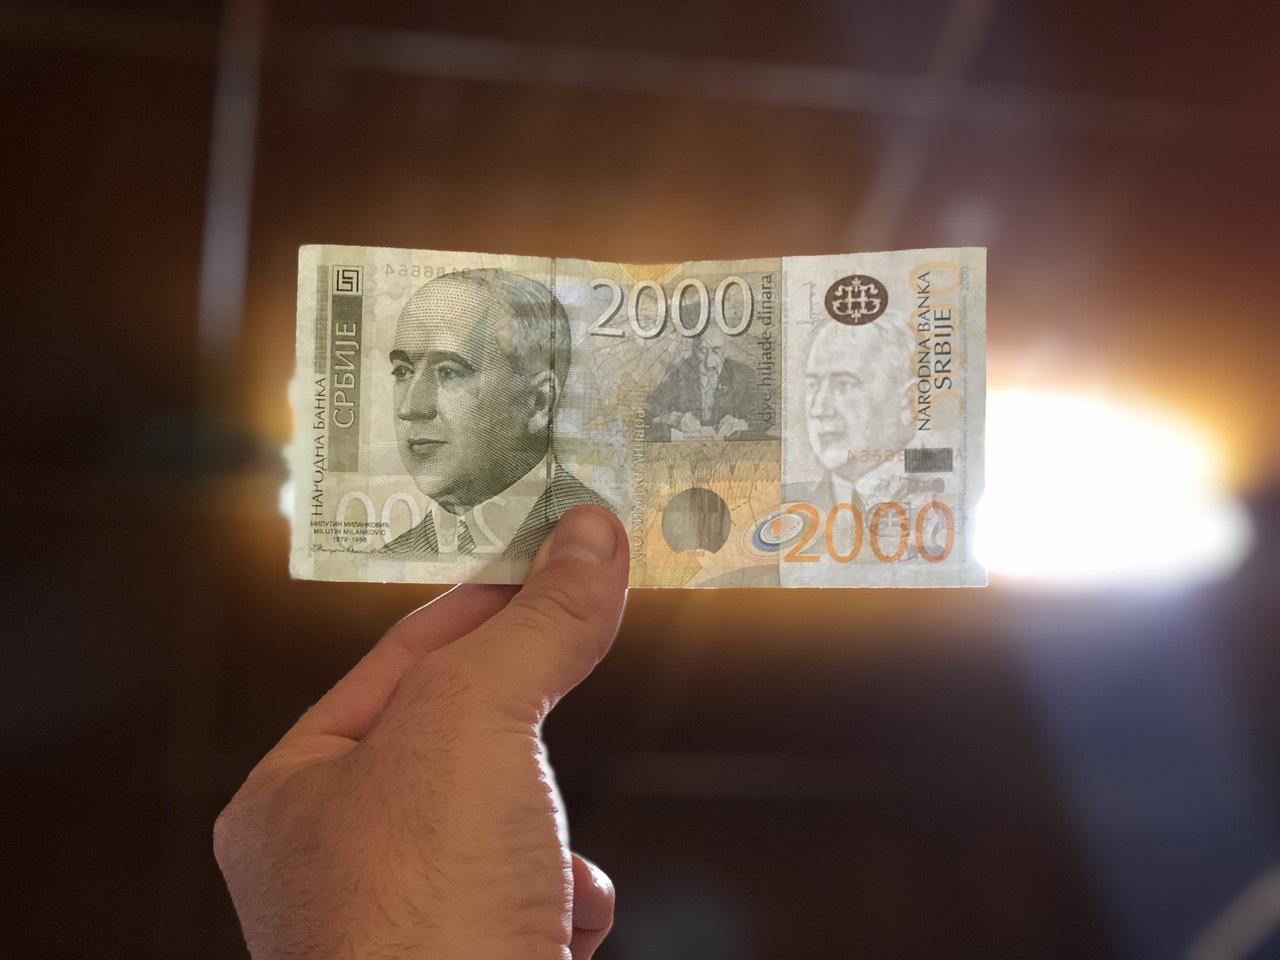 2000 dinara, foto: M. Miladinović